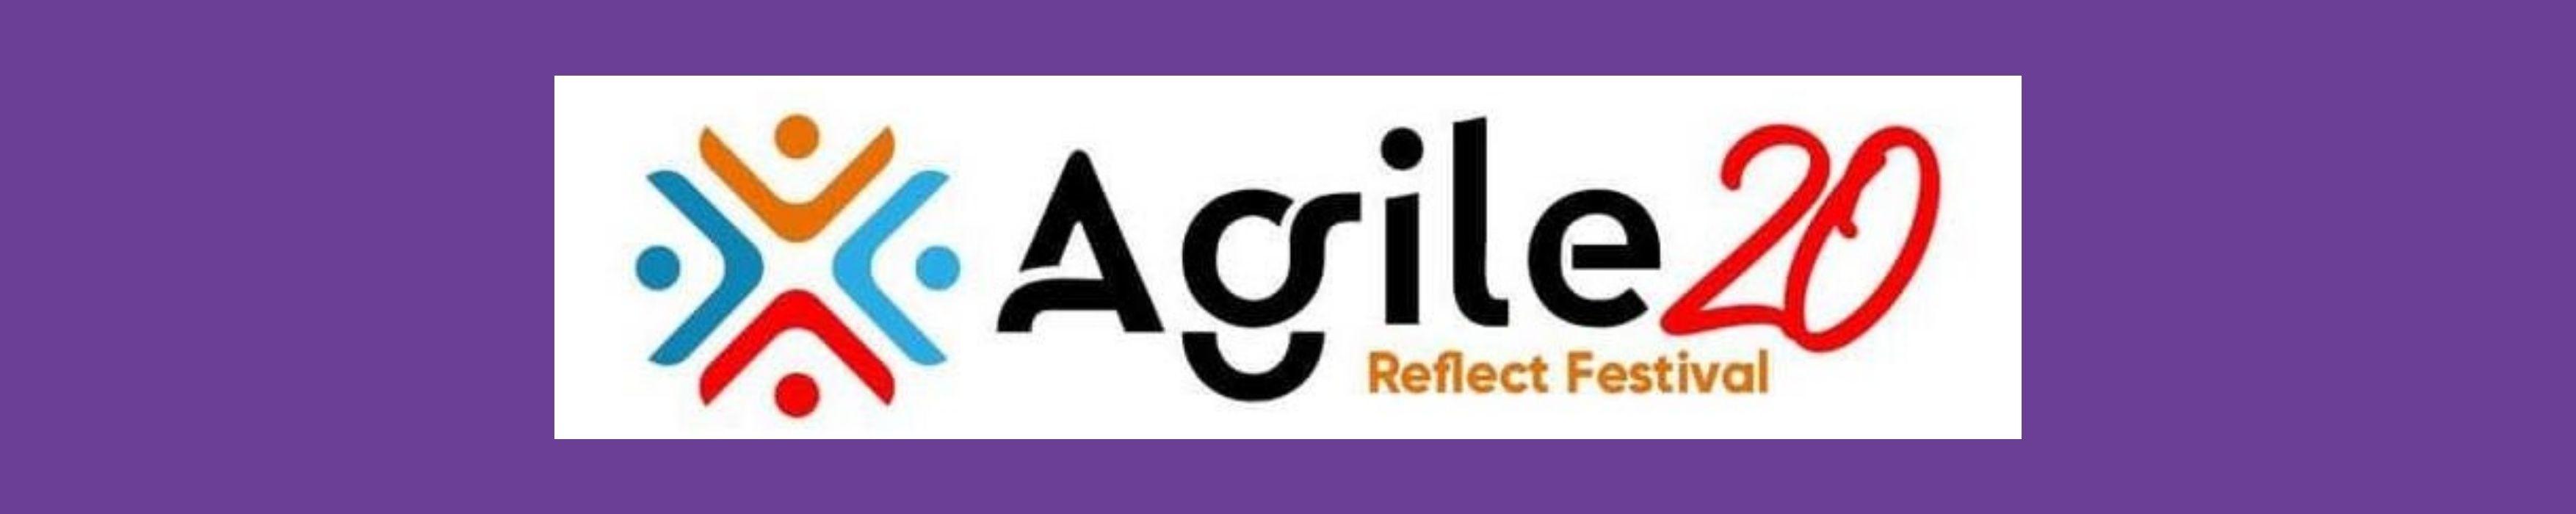 Banner Agile20Reflect Medium Quality